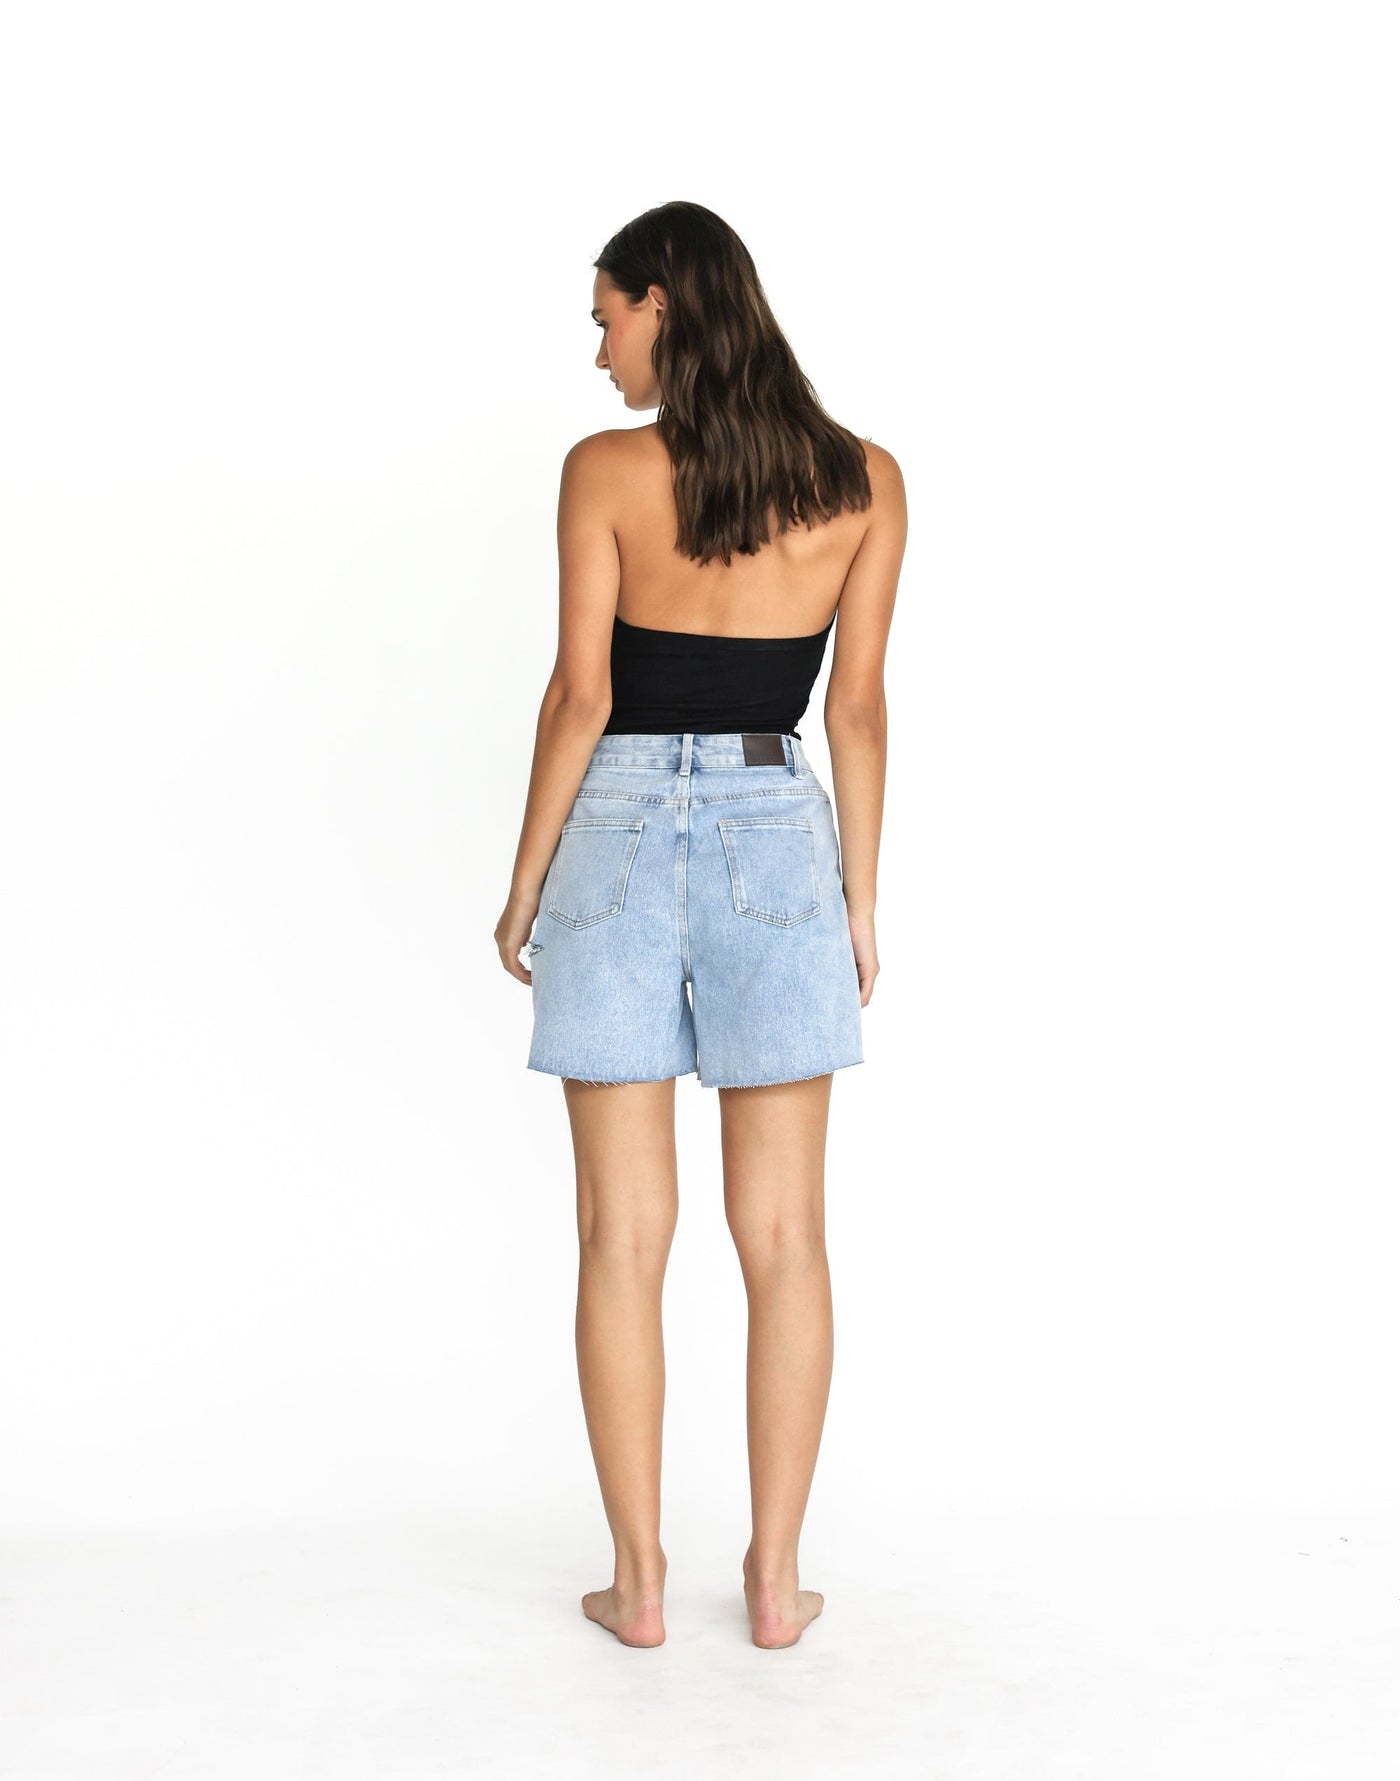 Sunlight Denim Shorts (Light Vintage) | CHARCOAL Exclusive - Split Side High Waisted Denim Shorts - Women's Shorts - Charcoal Clothing